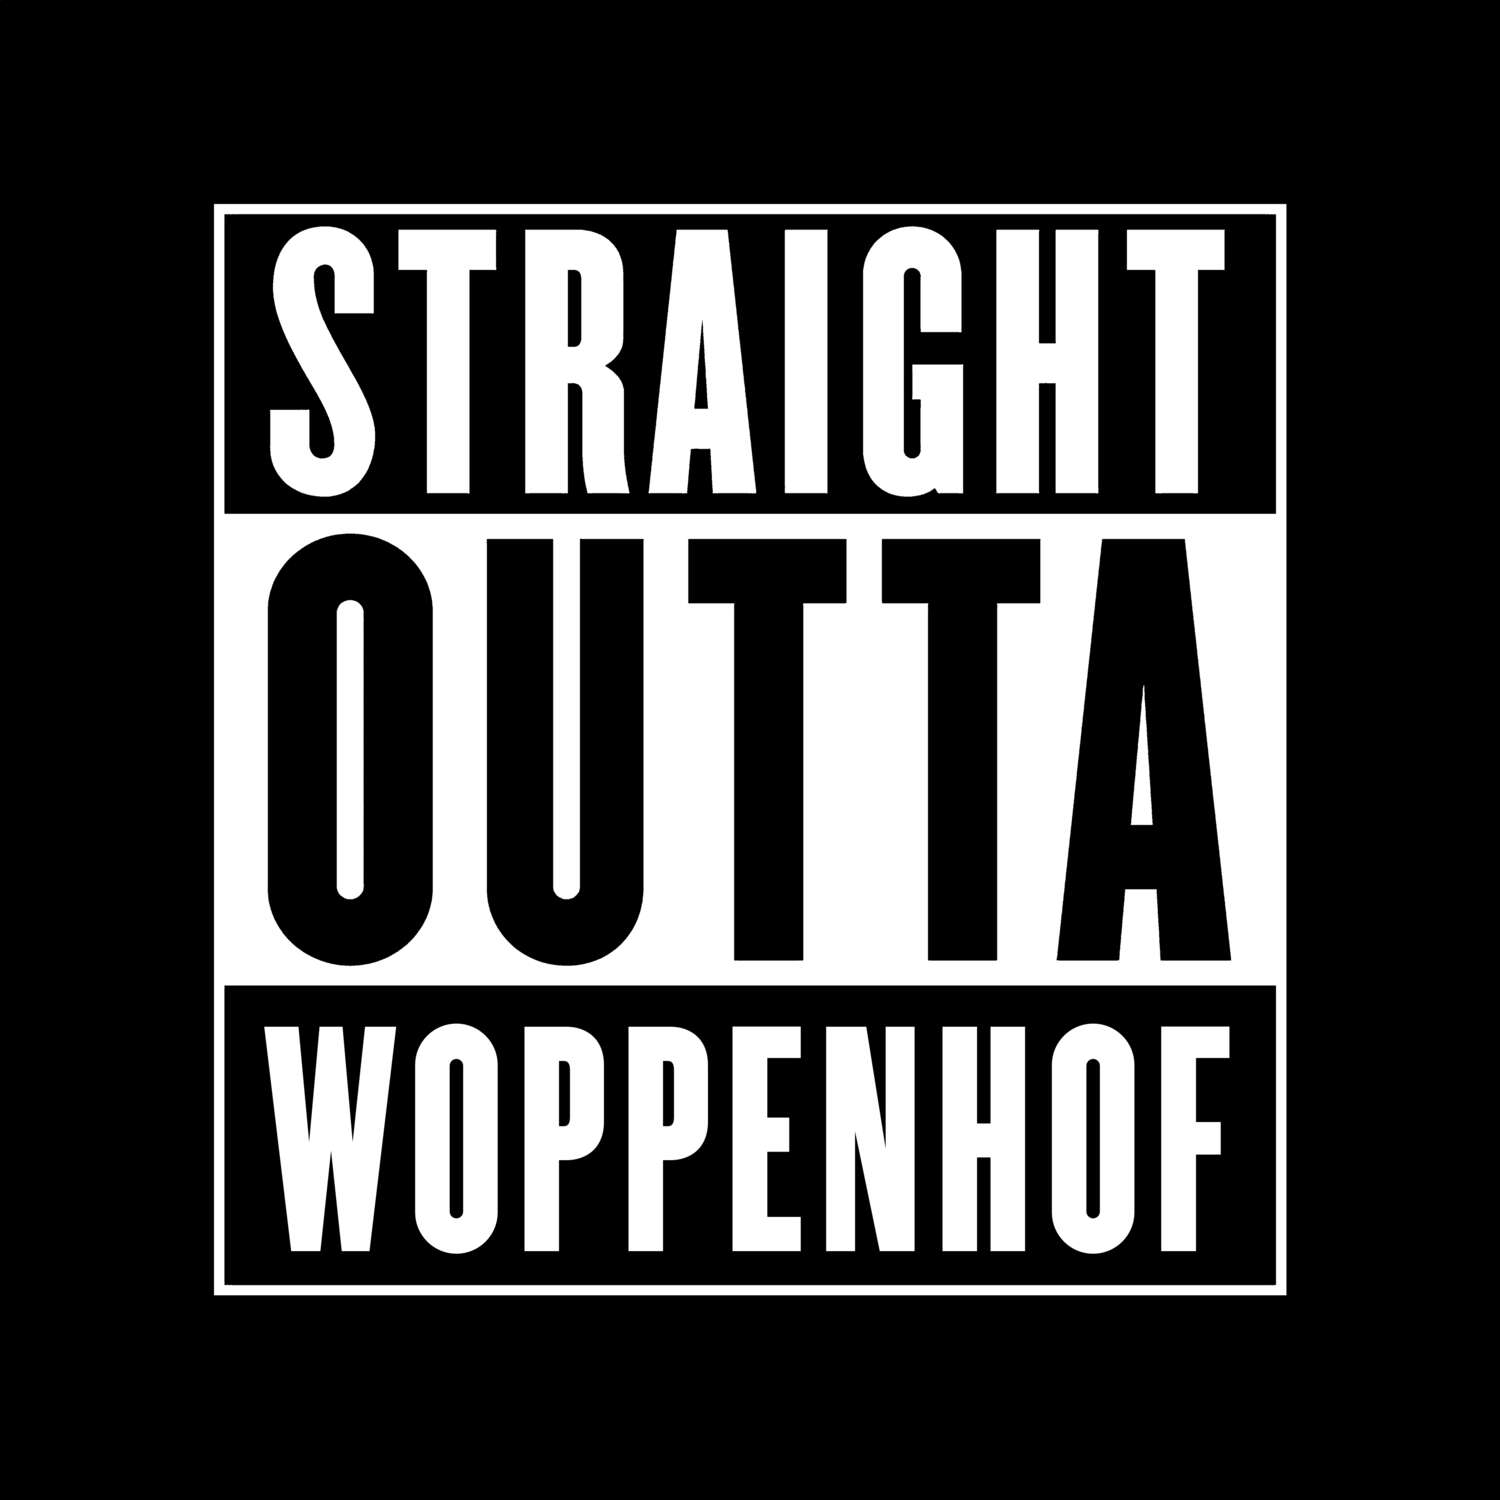 Woppenhof T-Shirt »Straight Outta«